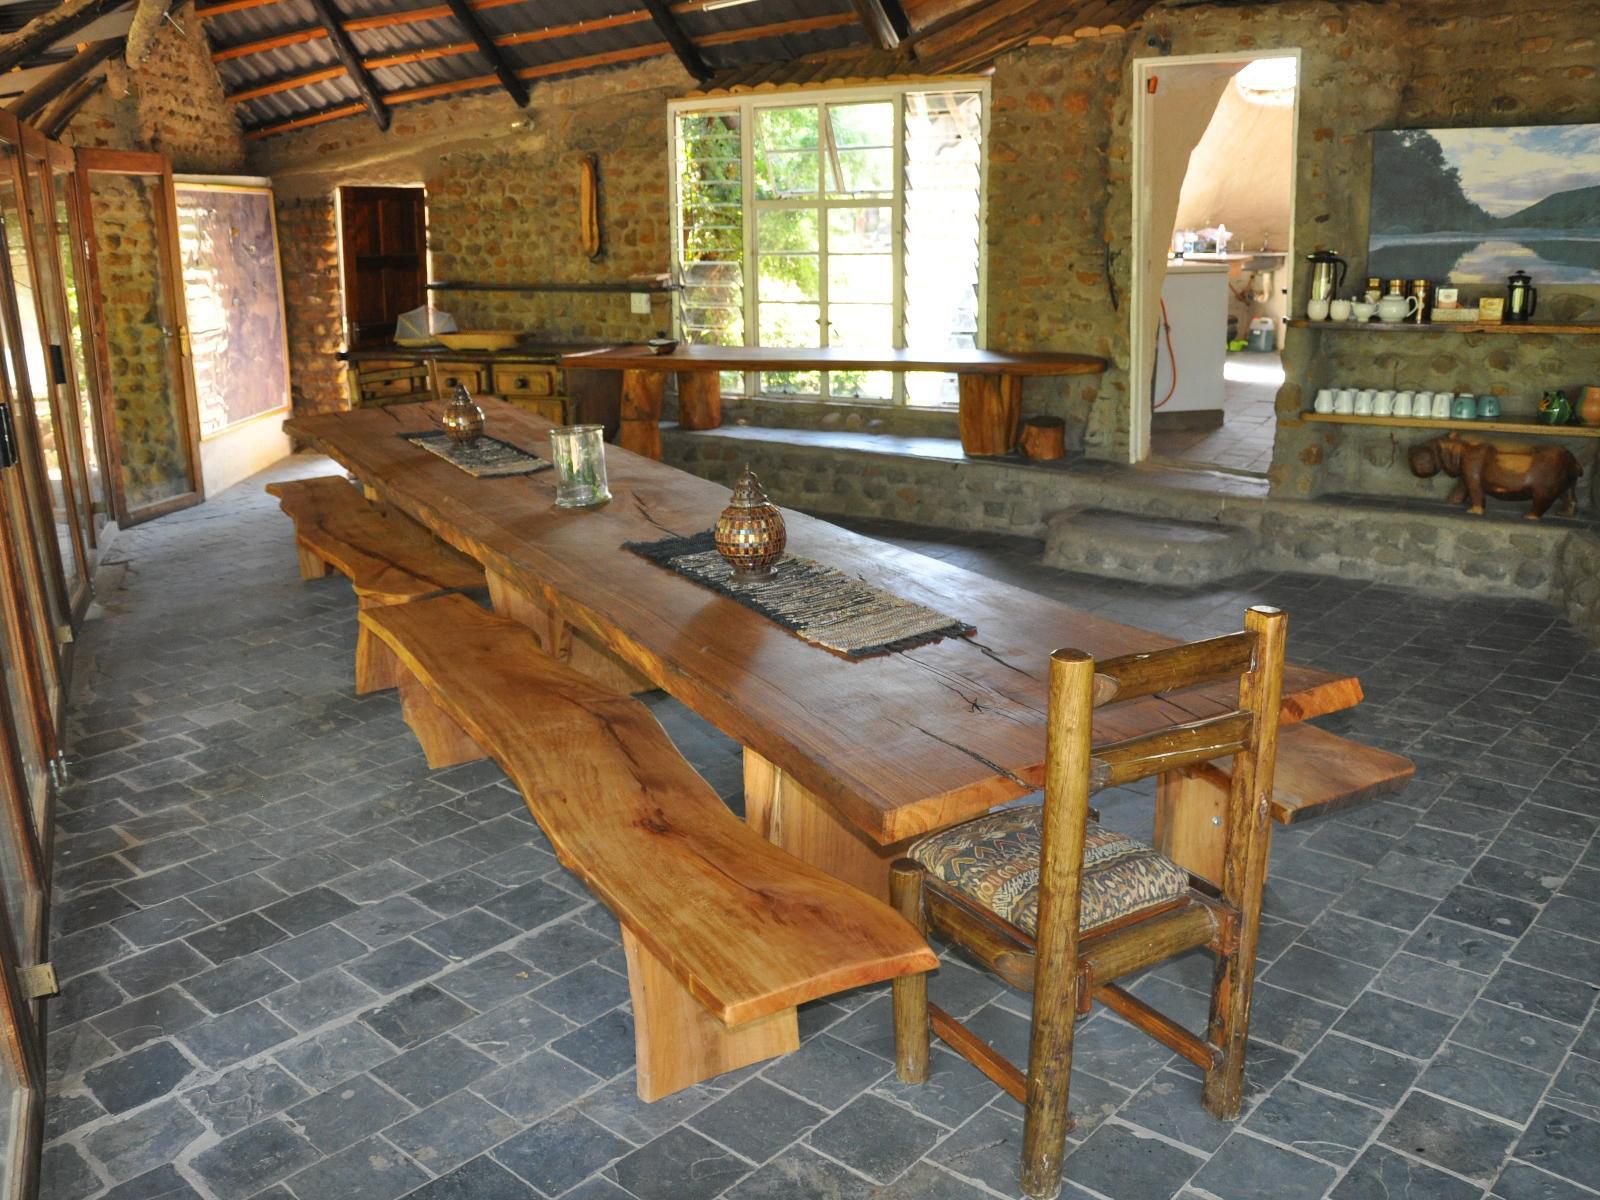 Gangeni Safari Bush Lodge Elandslaagte Kwazulu Natal South Africa 